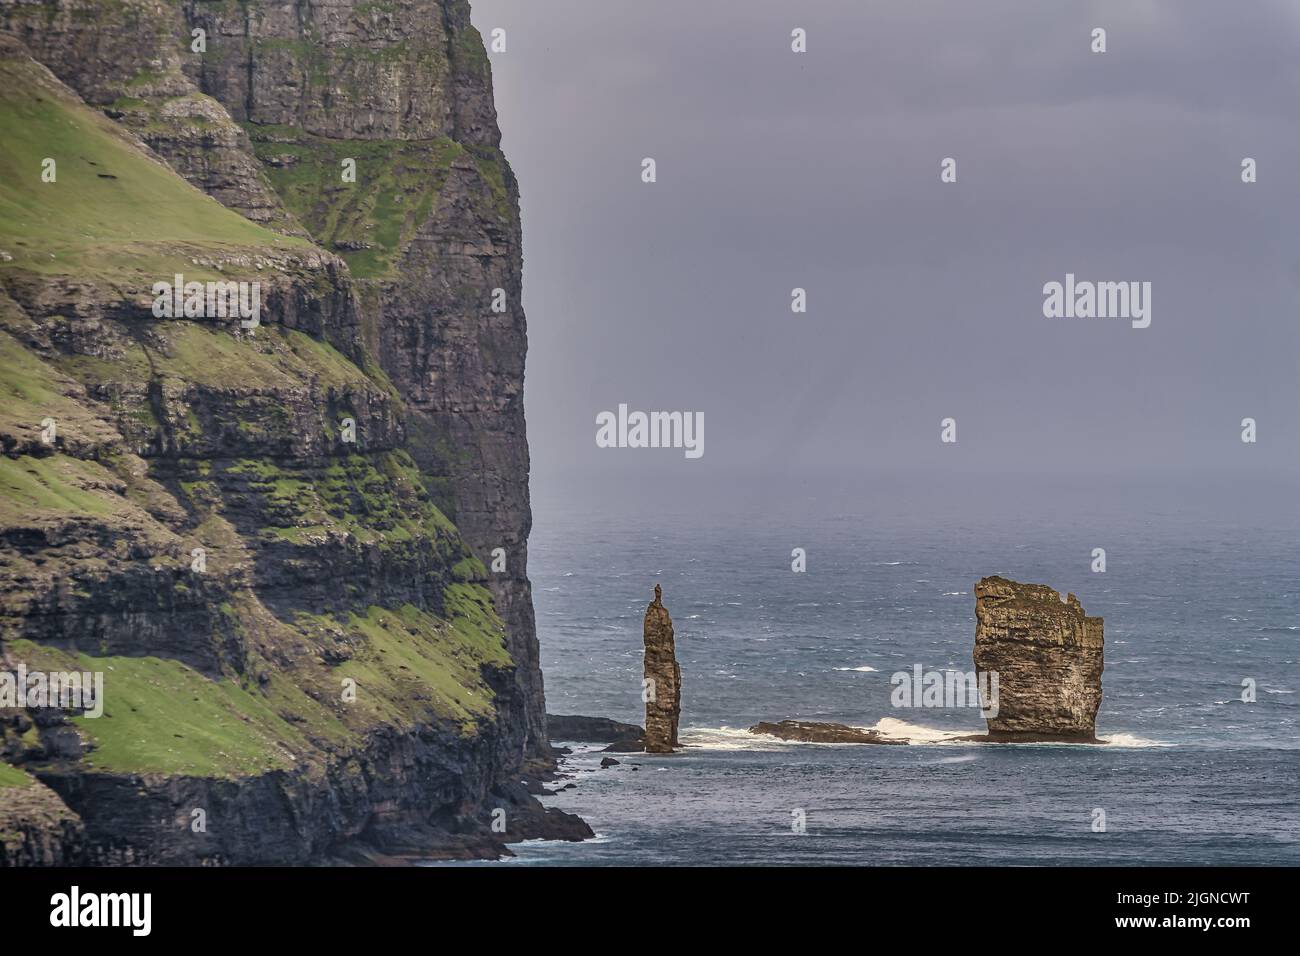 Risin og Kellingin rock formations on the coast of Eysturoy Island. Coastline cliffs landscape. Eidi, Faroe Islands Stock Photo